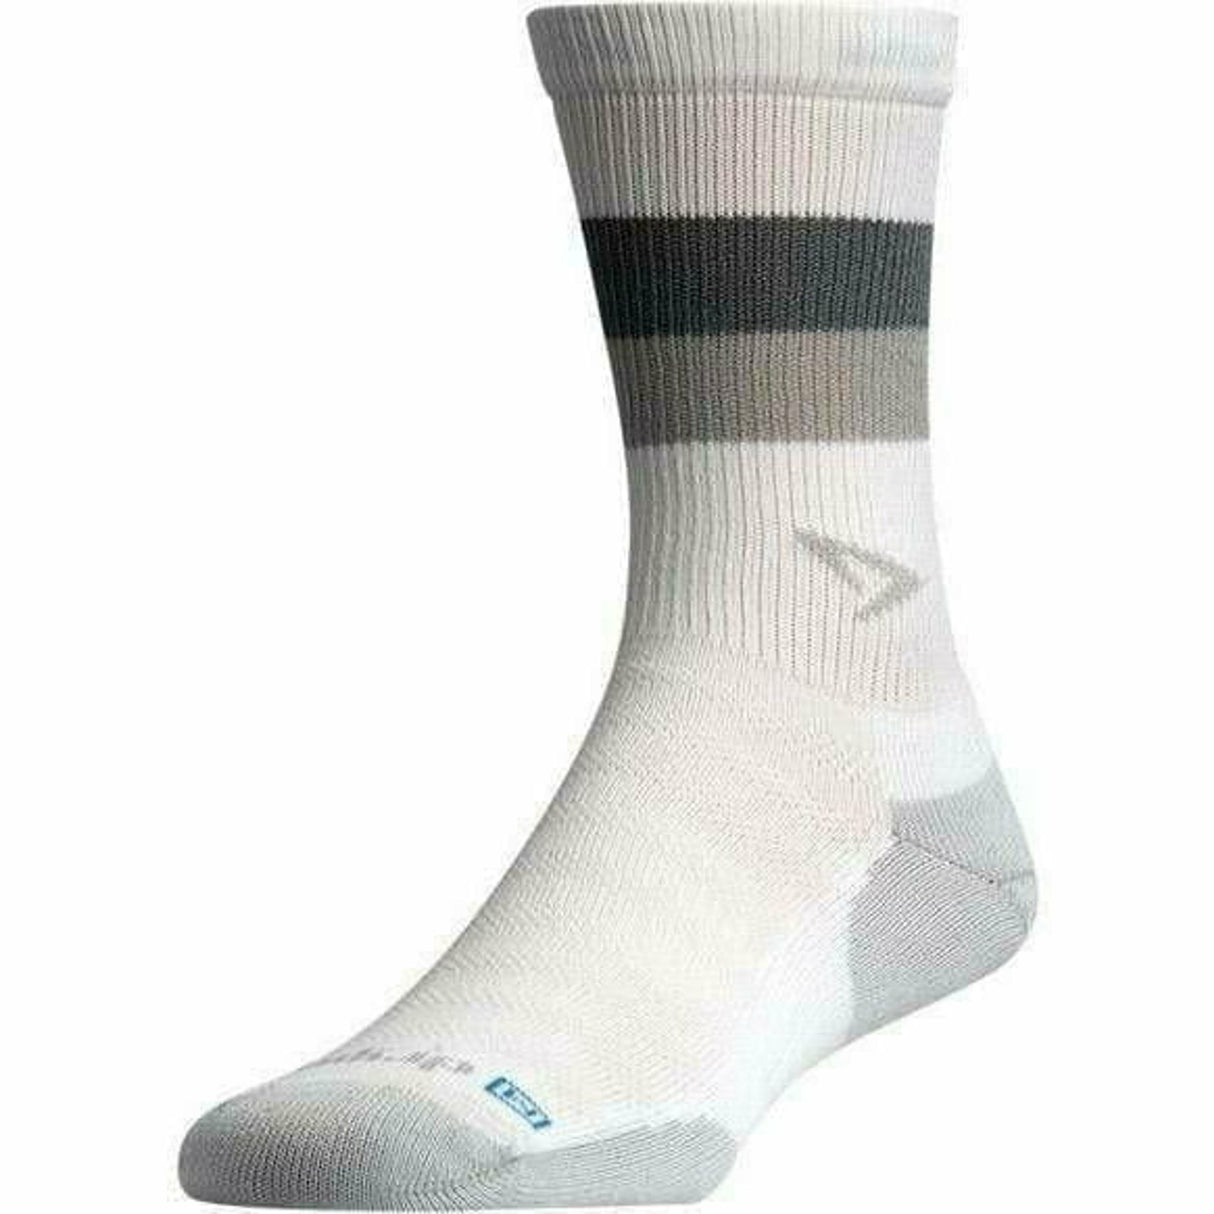 Drymax Running Lite-Mesh Crew Socks  -  Small / White with Anthracite/Gray